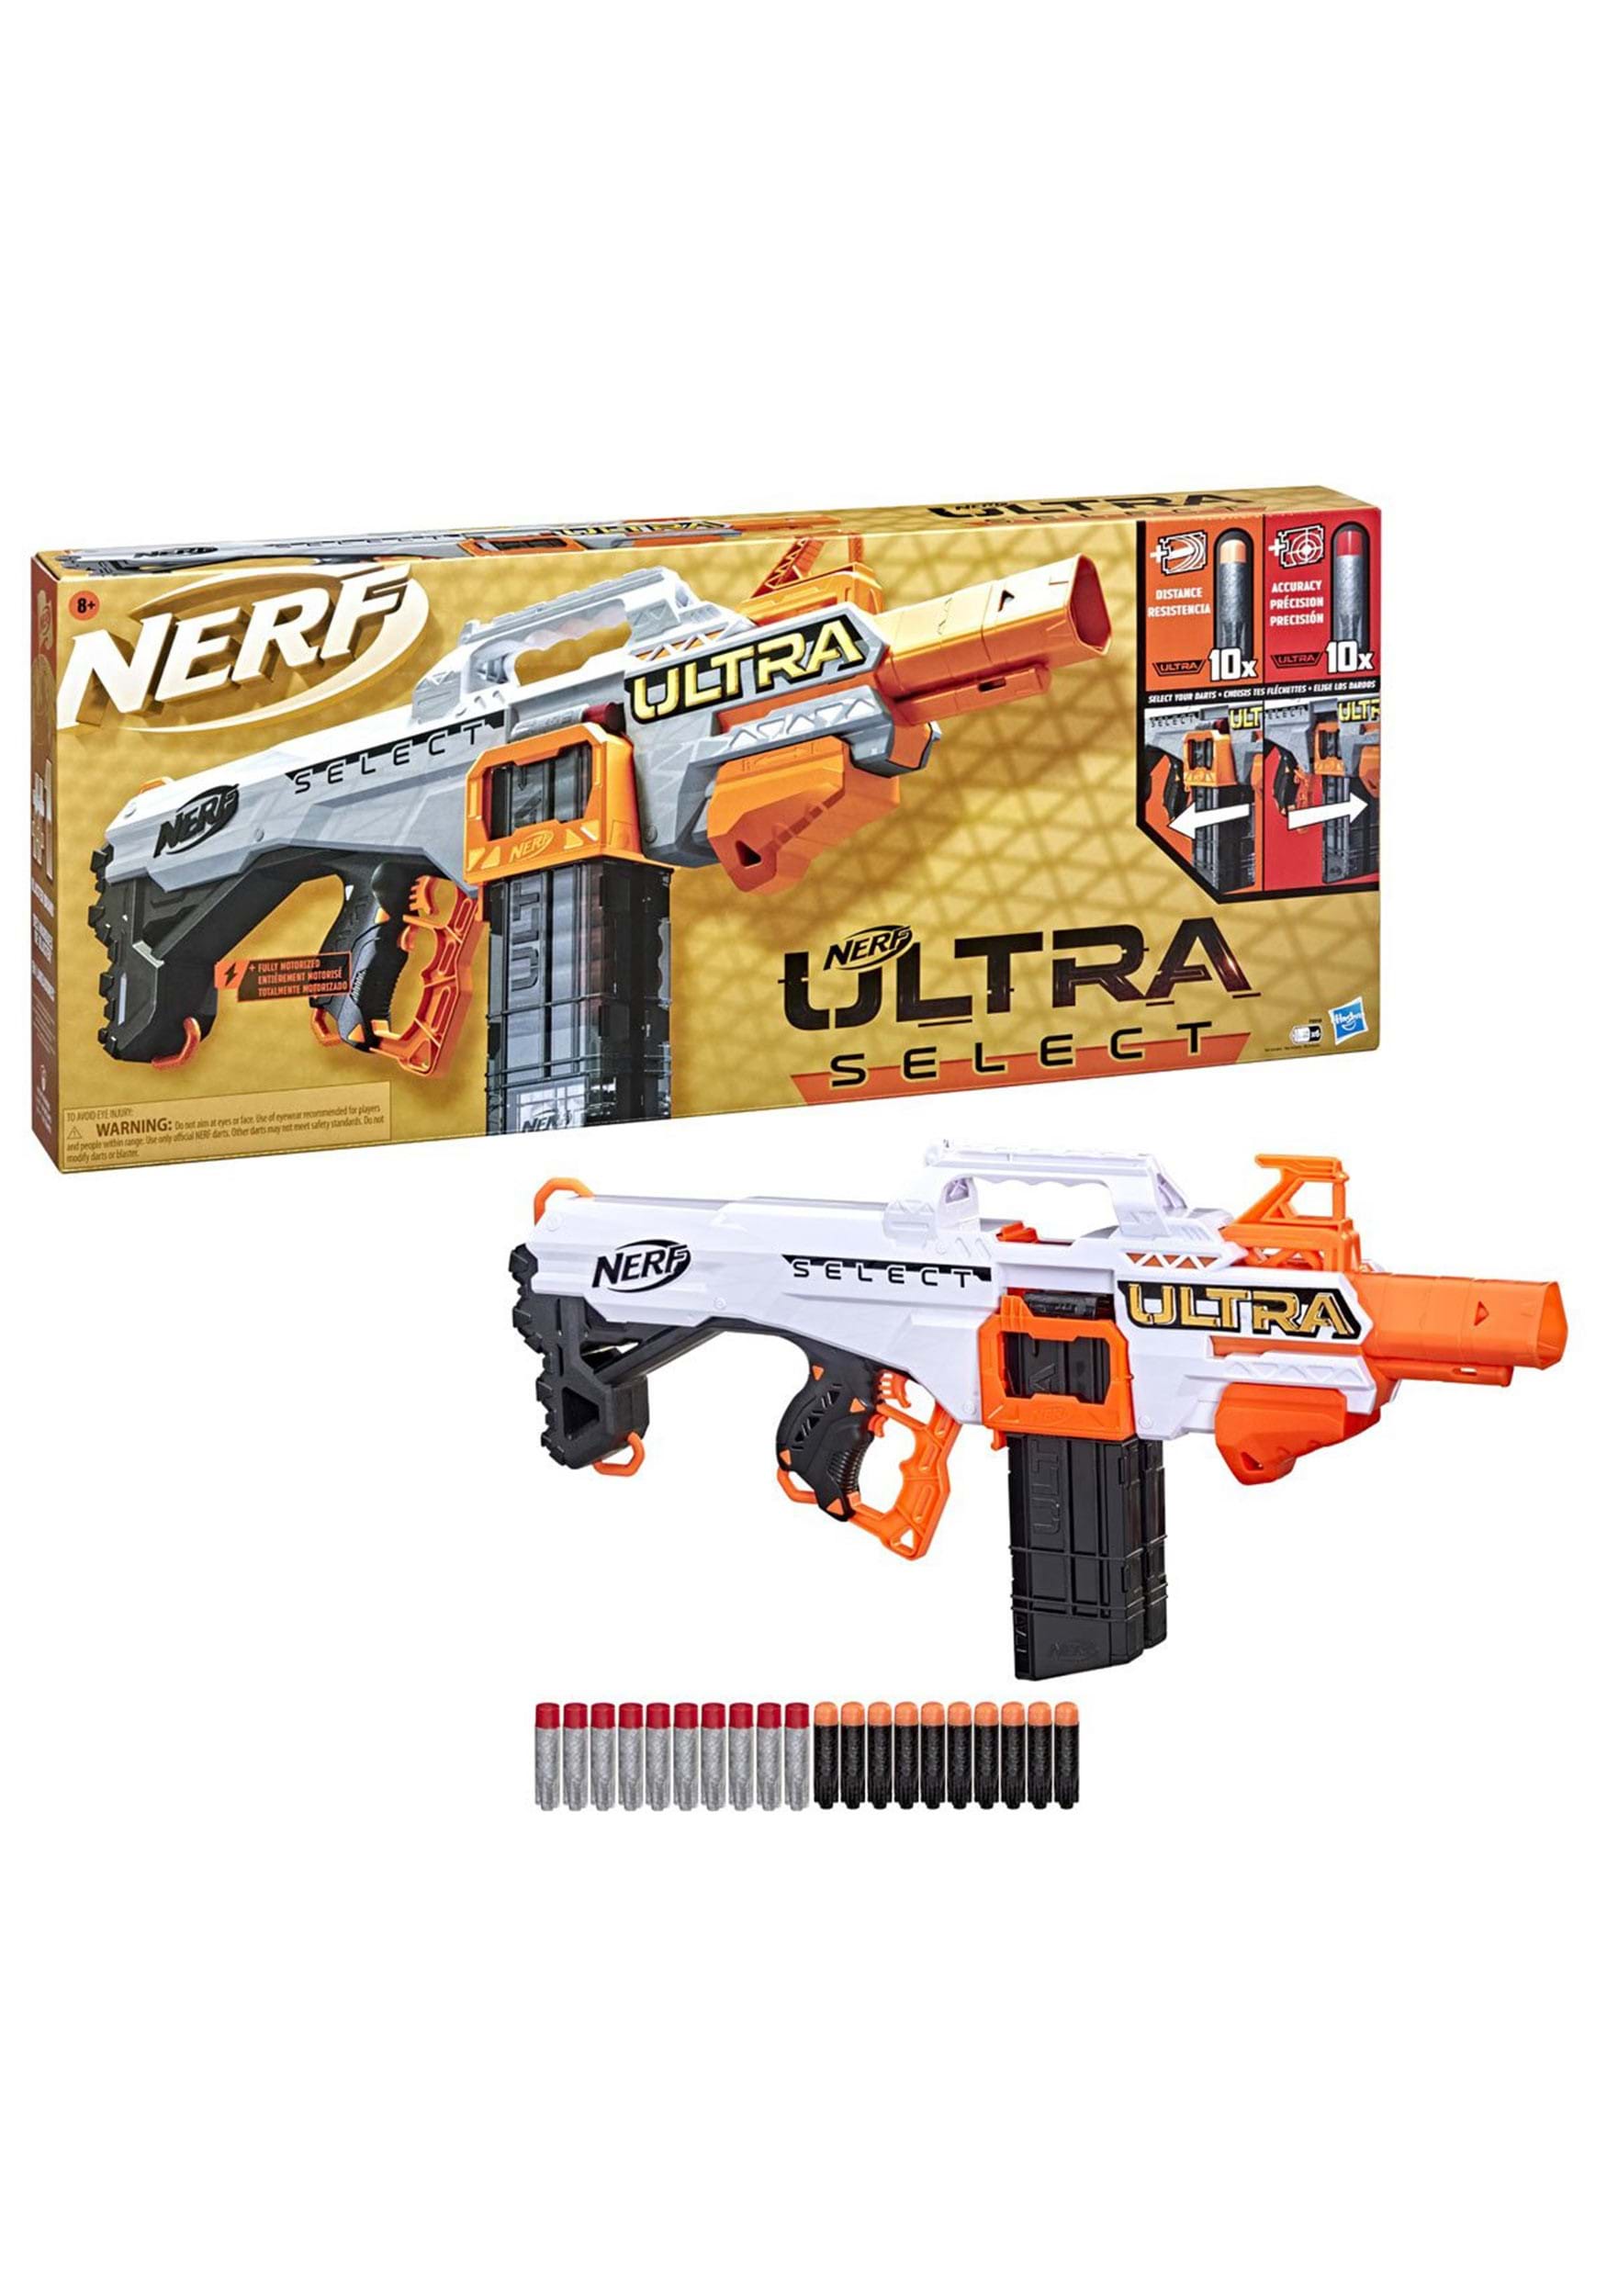 Ultra Select Dart Blaster from Nerf